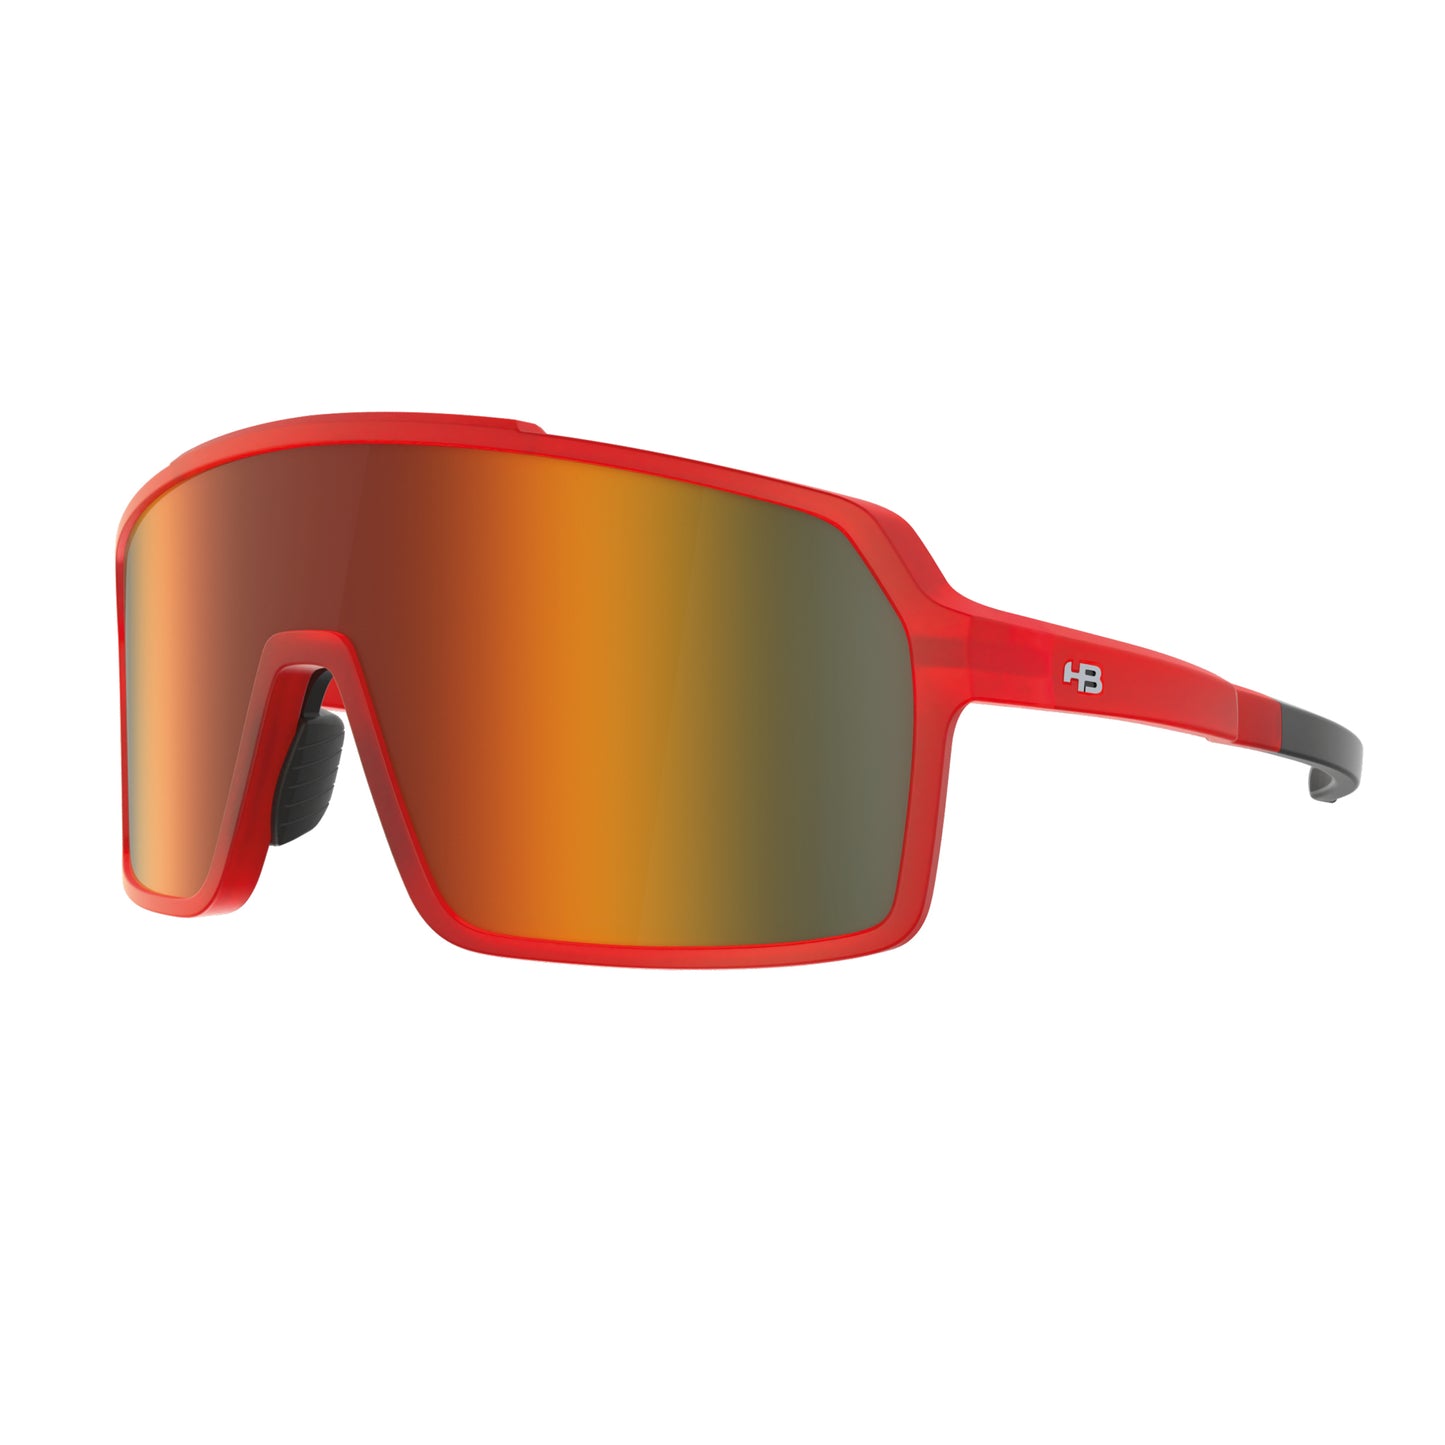 Óculos de Sol HB Grinder Matte Dark Red/ Orange Espelhado - Loja HB